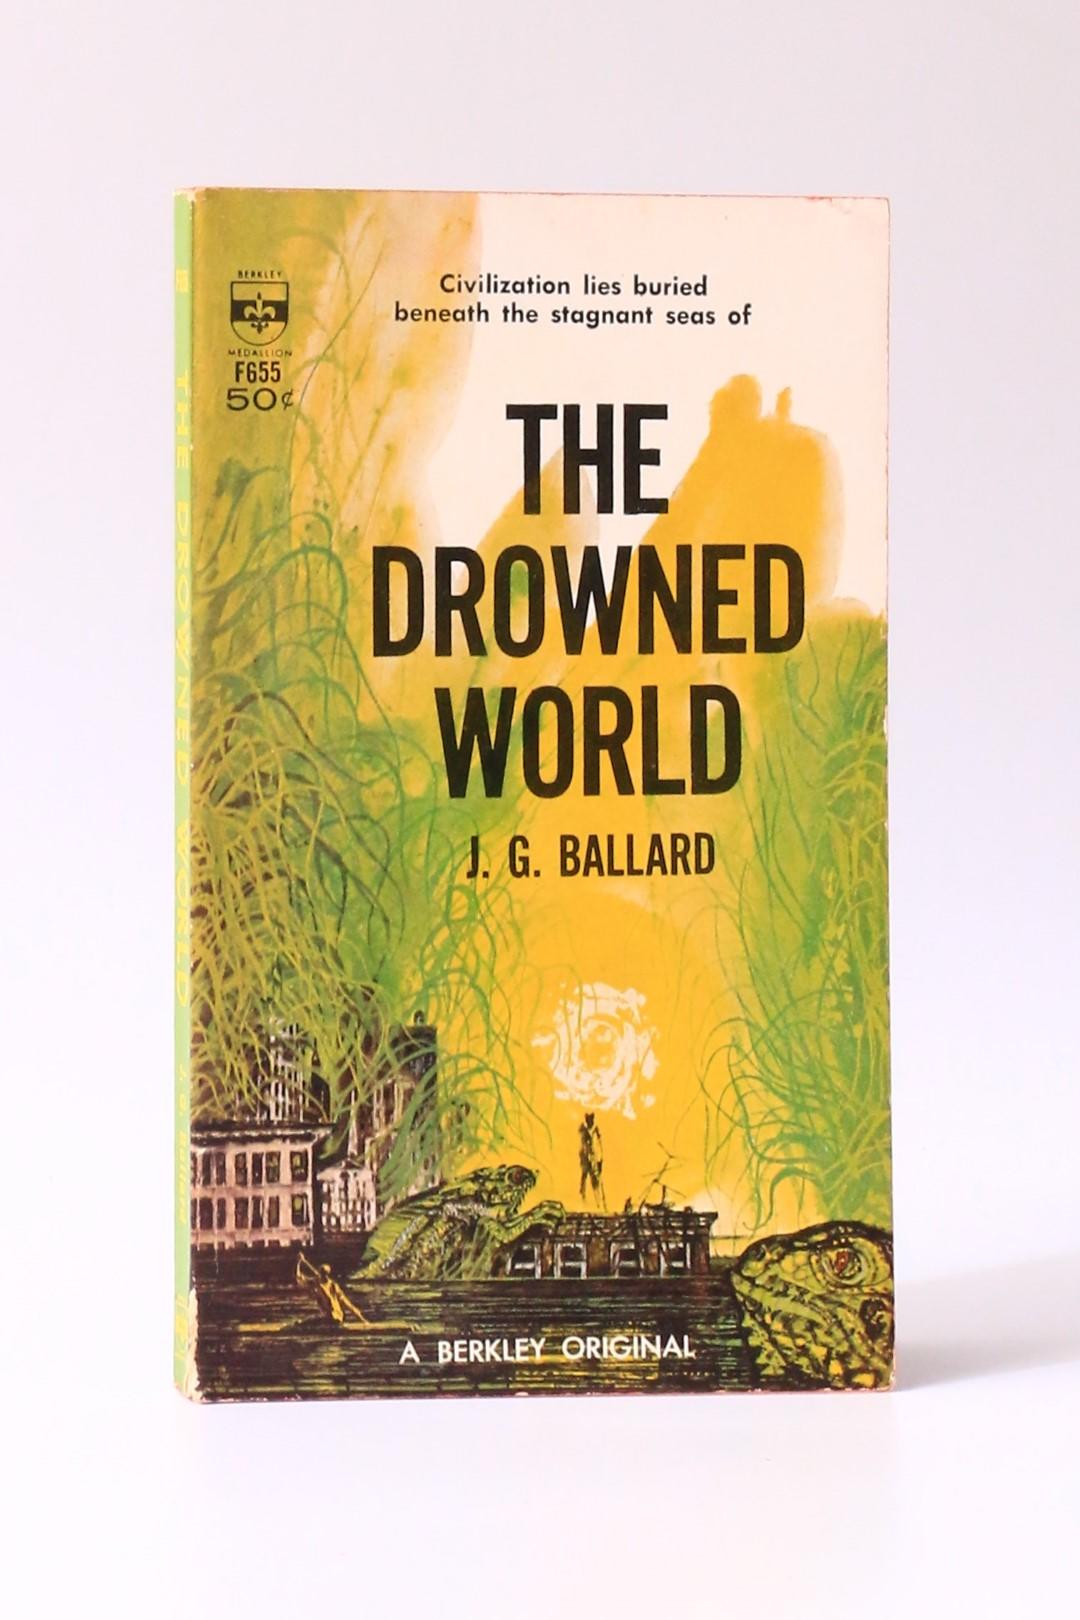 J.G. Ballard - The Drowned World - Berkley Medallion, 1962, First Edition.